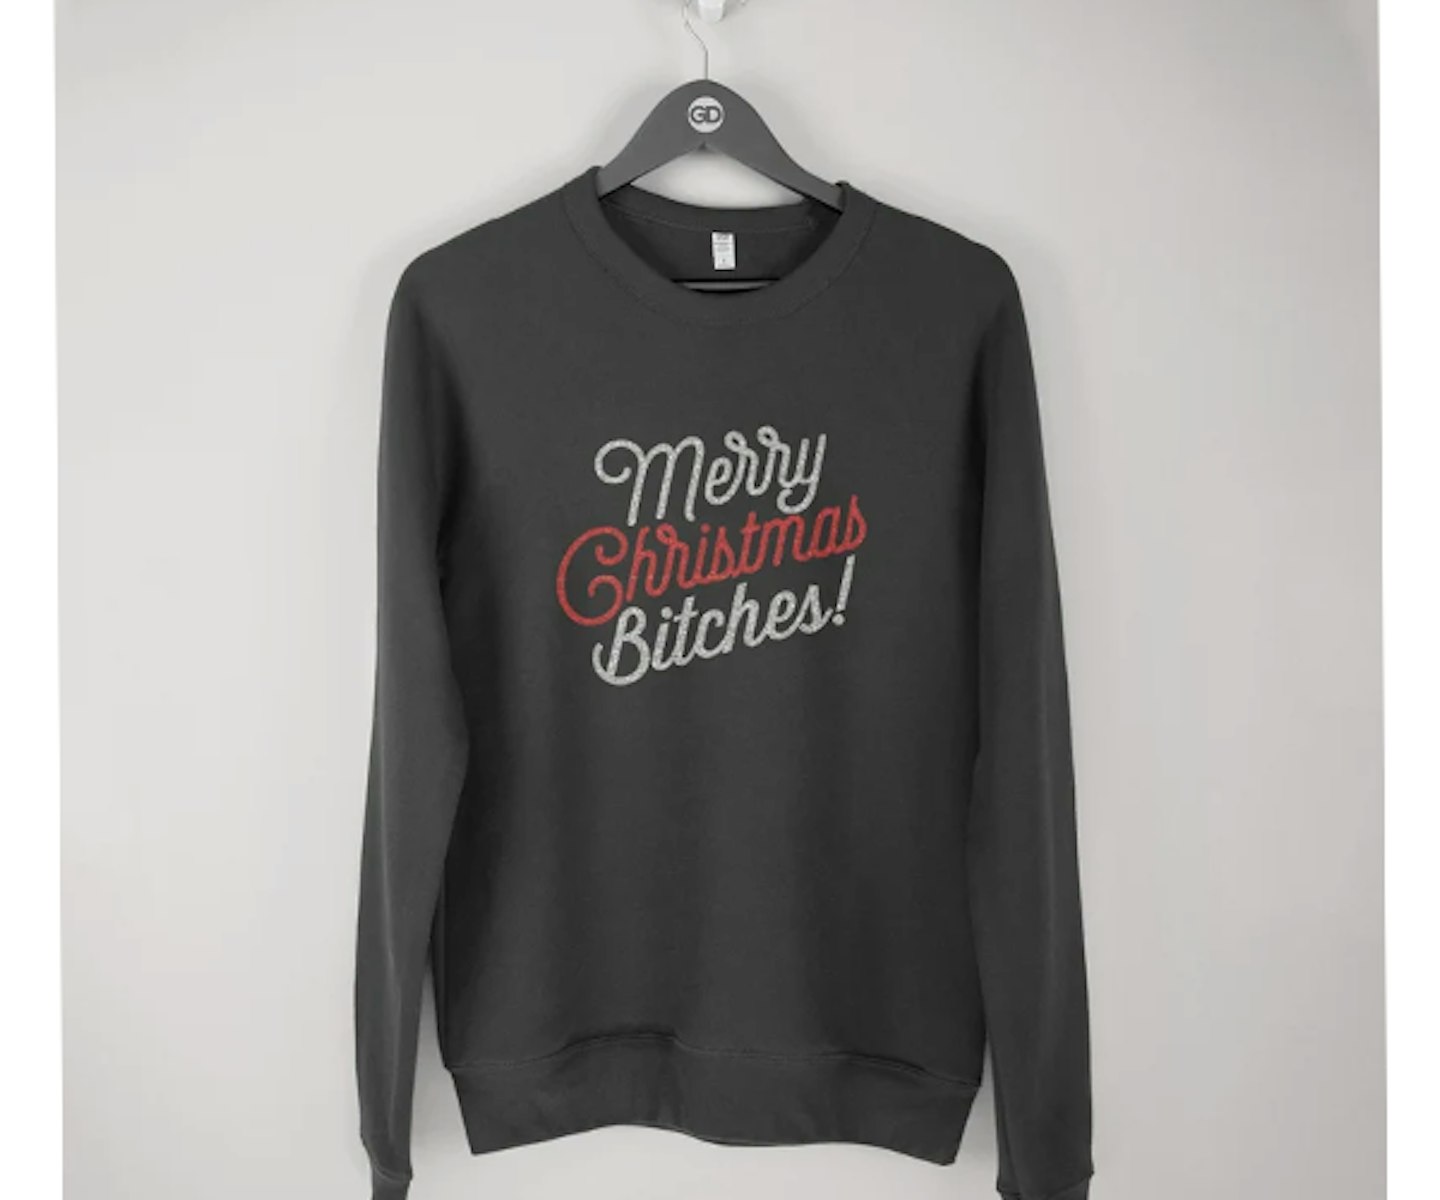 Merry Christmas Bitches sweatshirt jumper